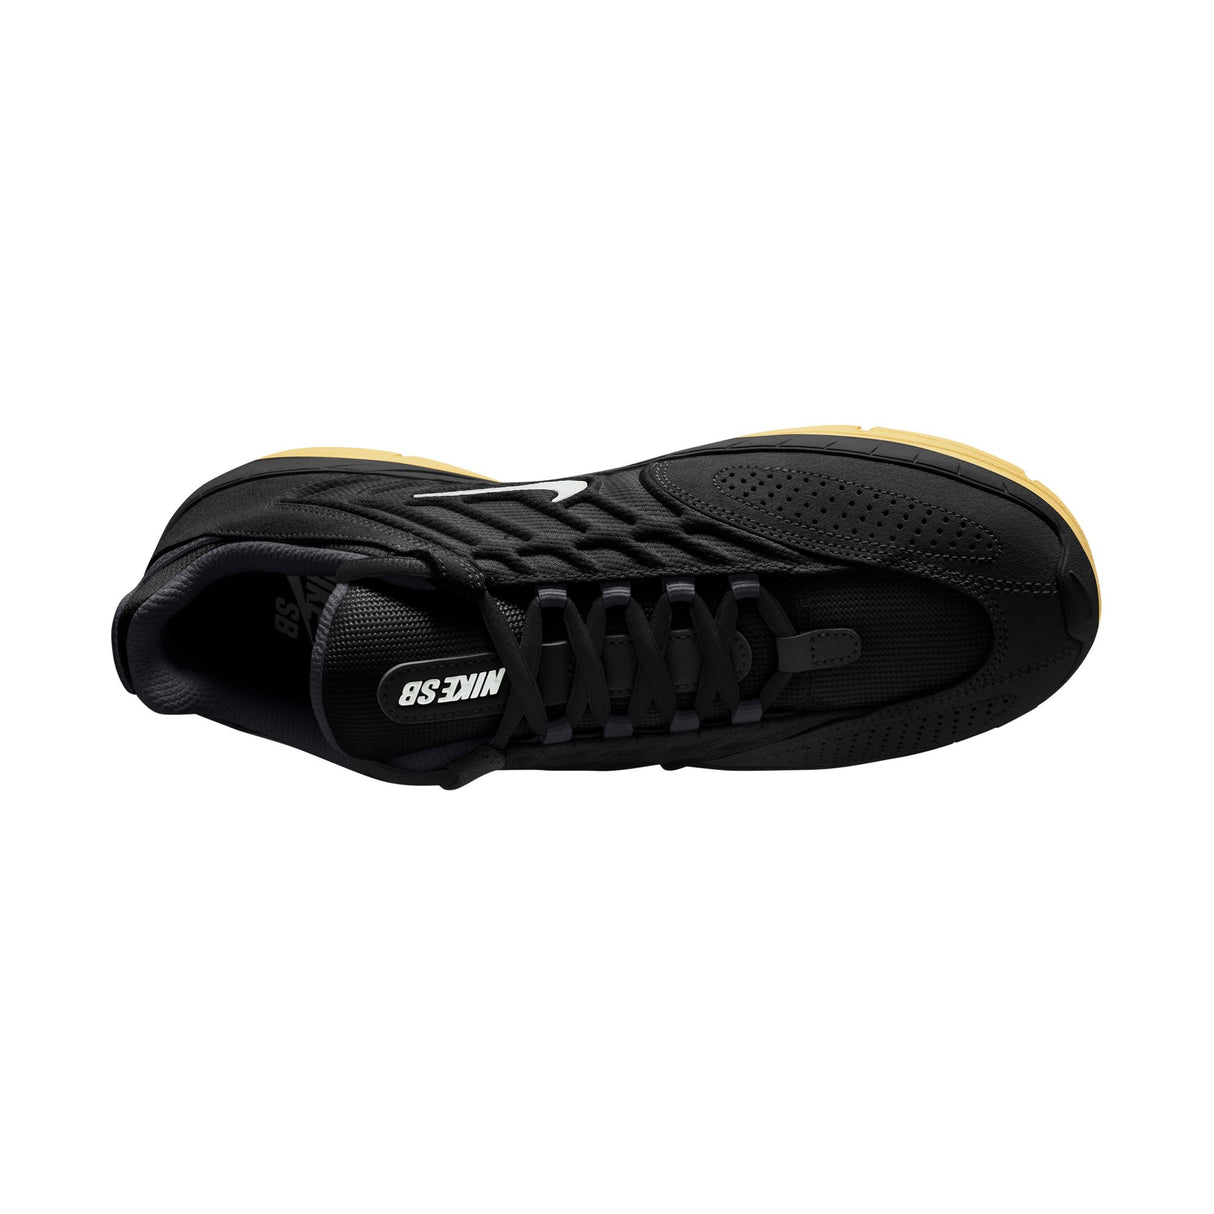 Nike SB Vertebrae Black/Summit White Anthracite Shoes